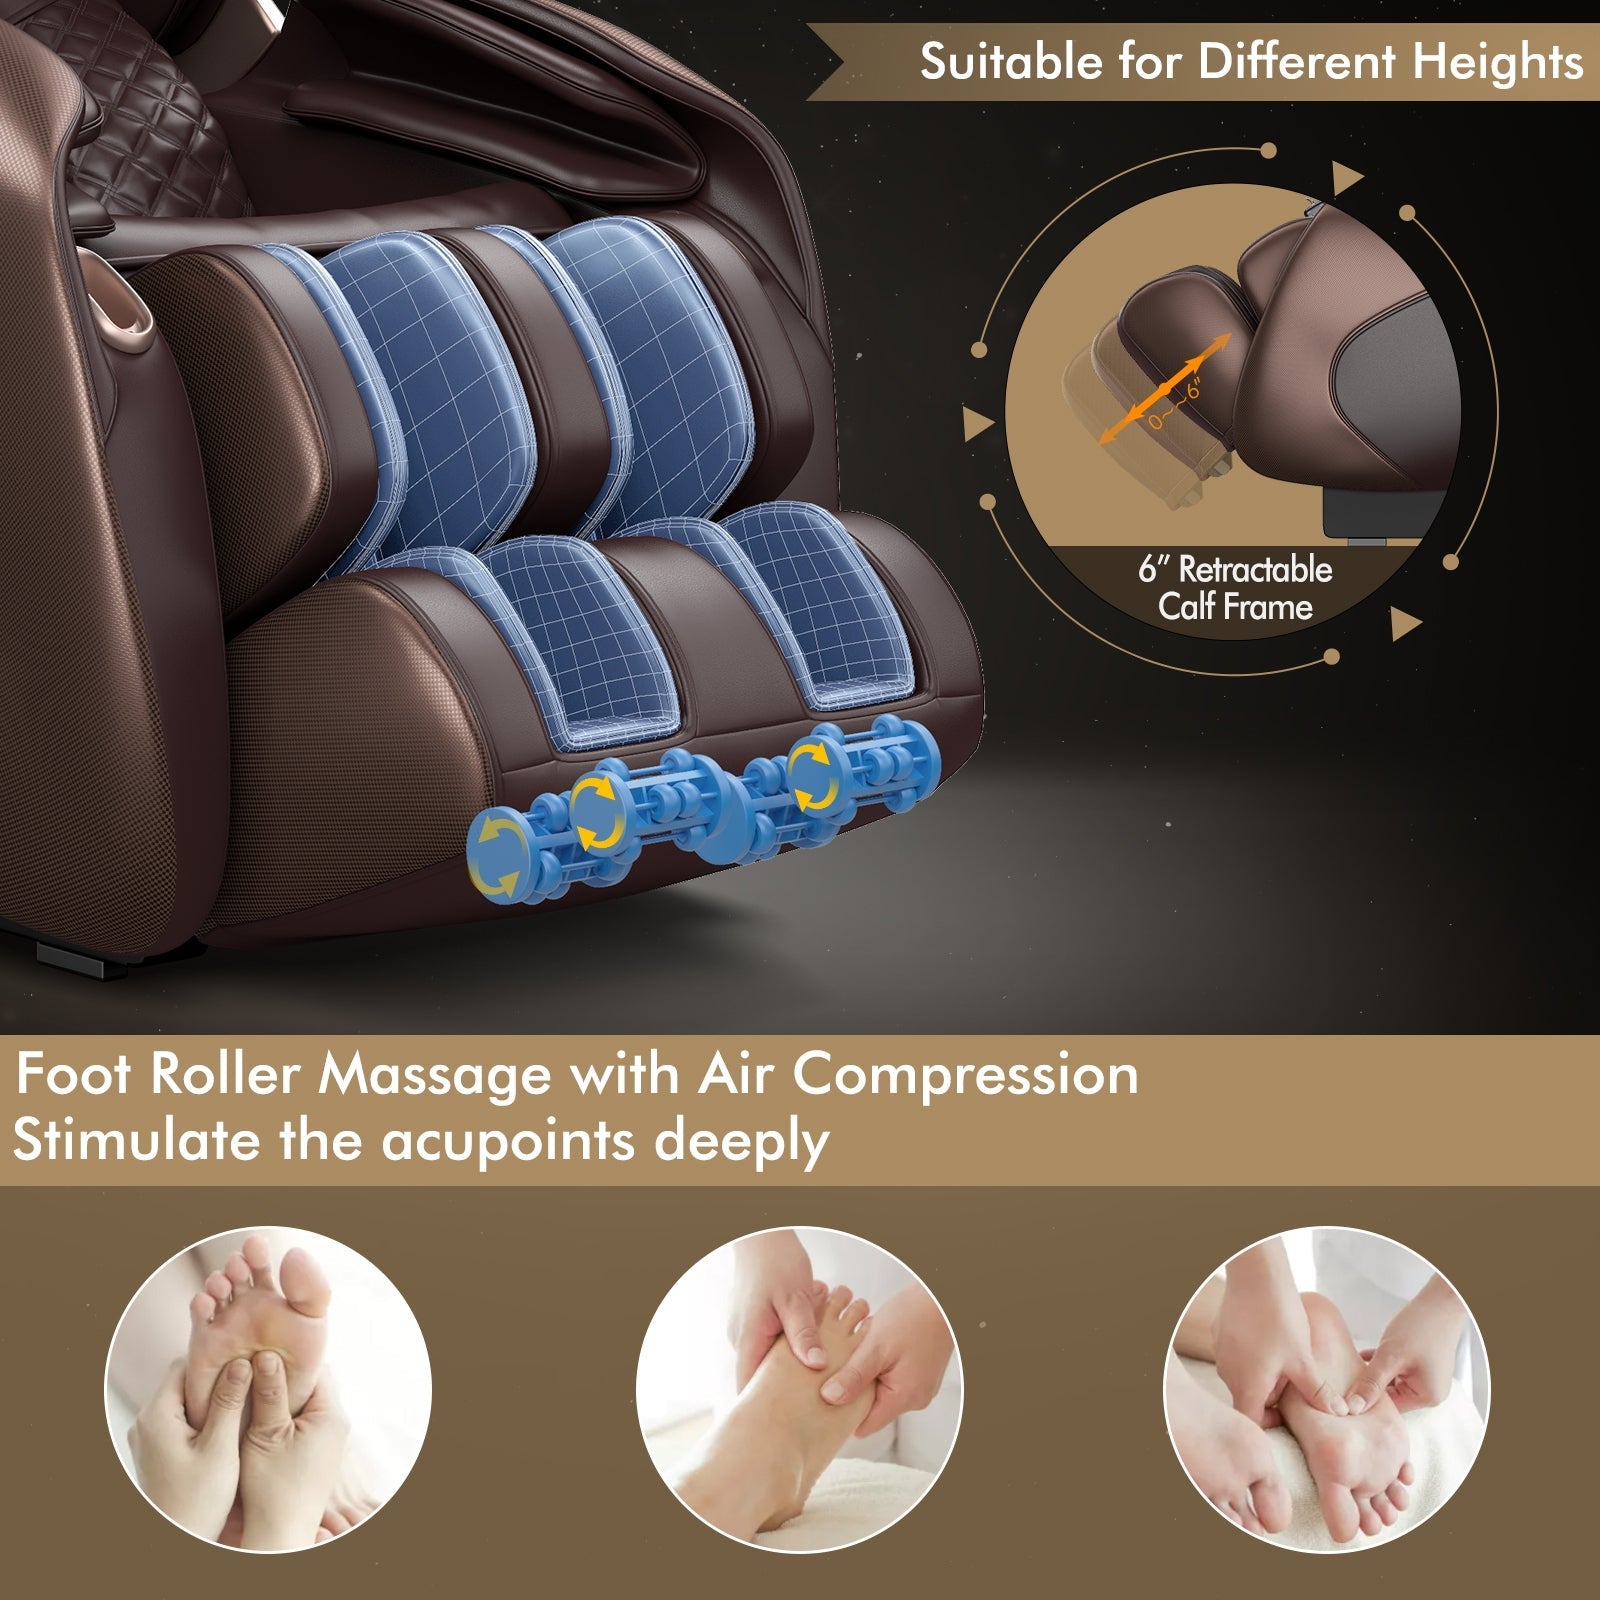 Full Body Zero Gravity Shiatsu Massage Chair with Built-In Heat Therapy System